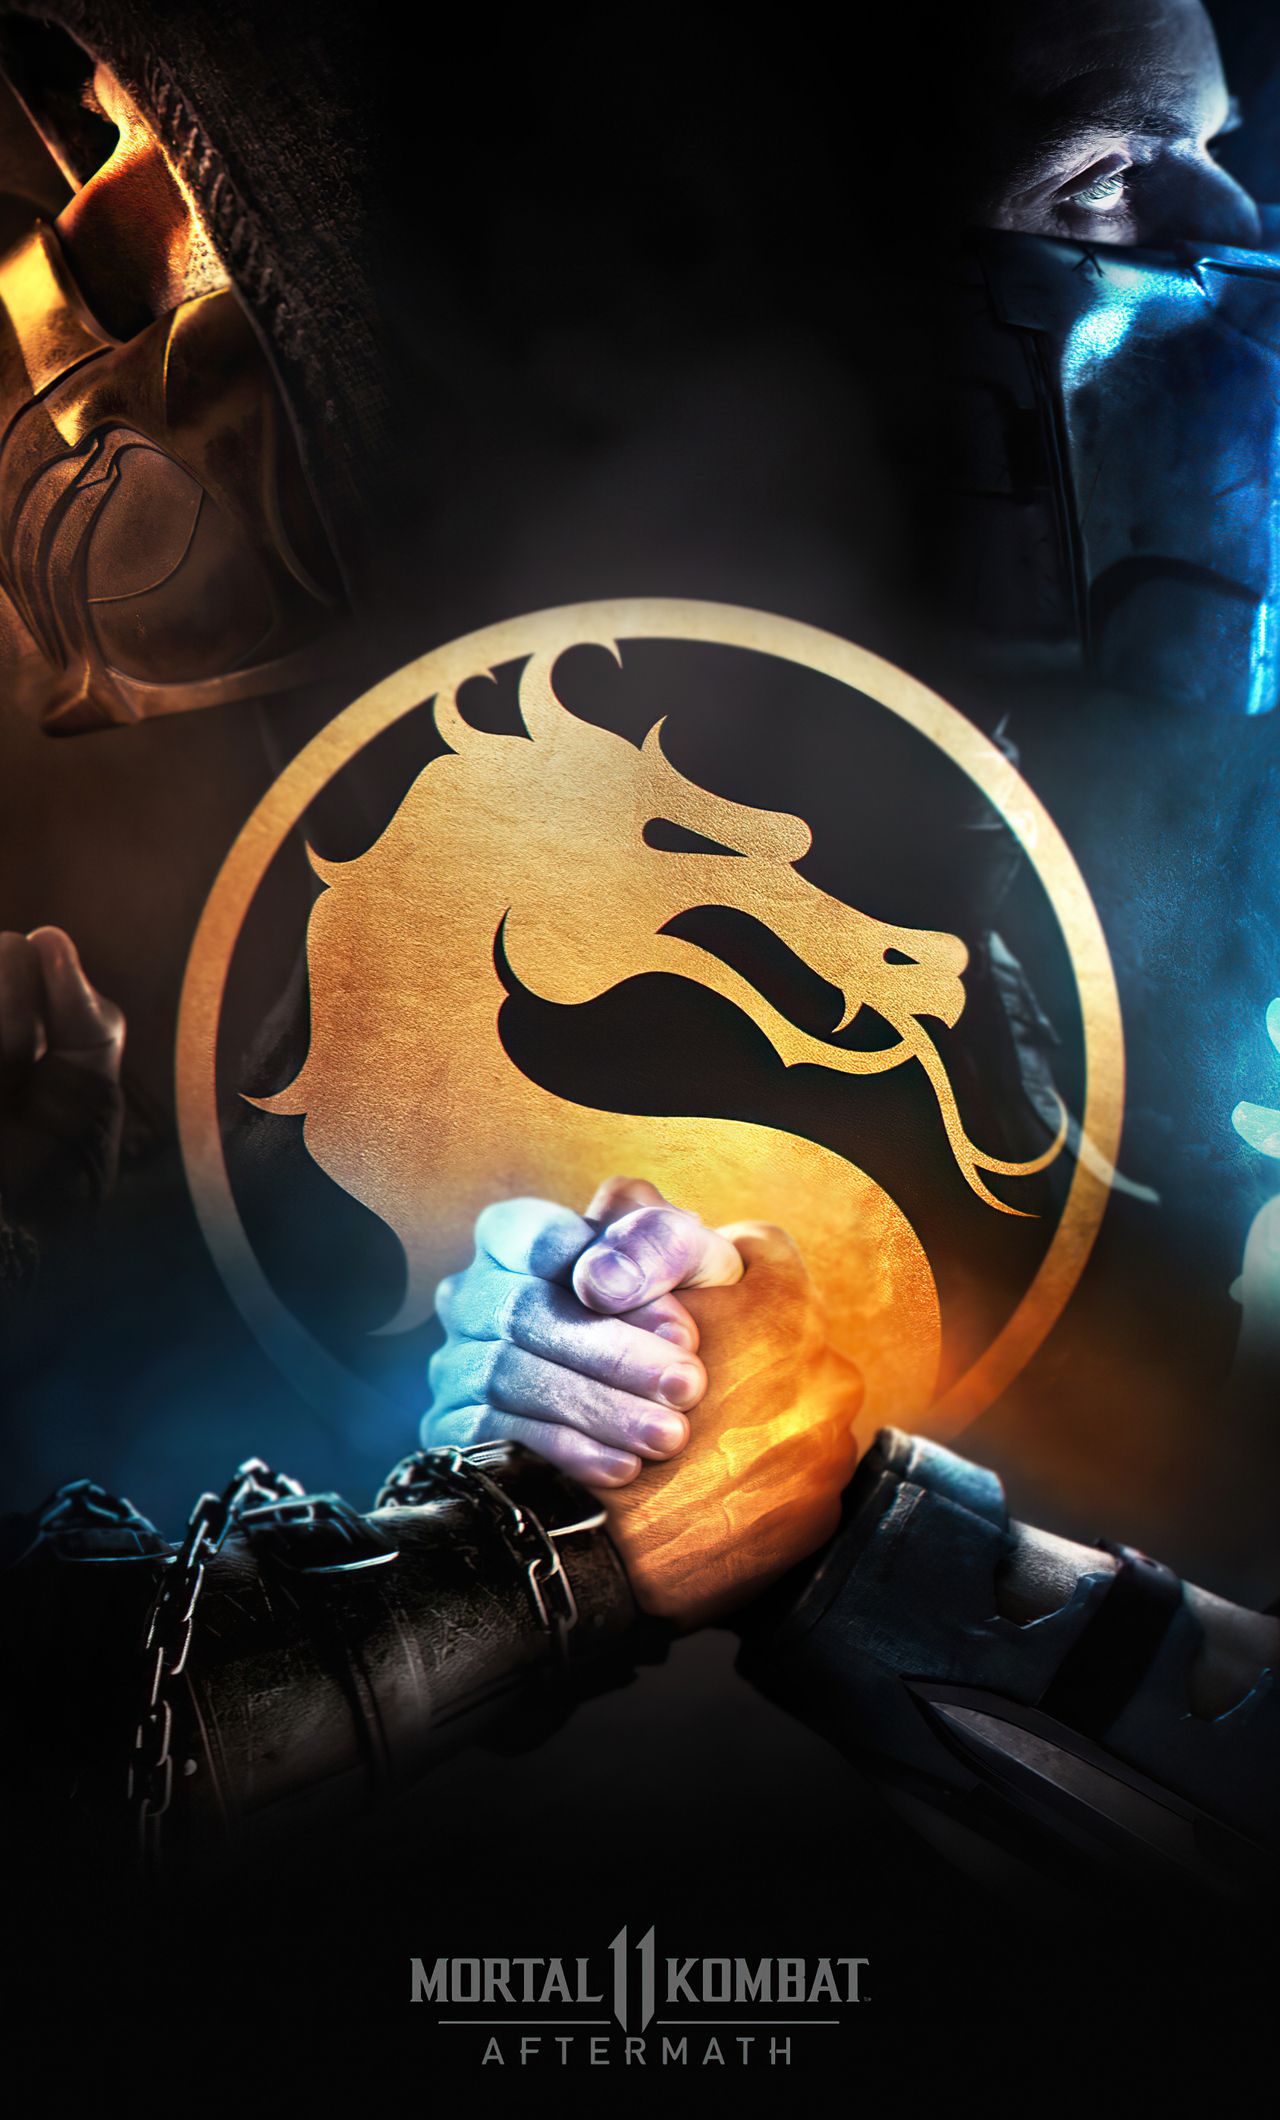 SCORPION AND SUB ZERO Mortal Kombat iPhone HD 4k Wallpaper, Image, Background, Photo and Picture